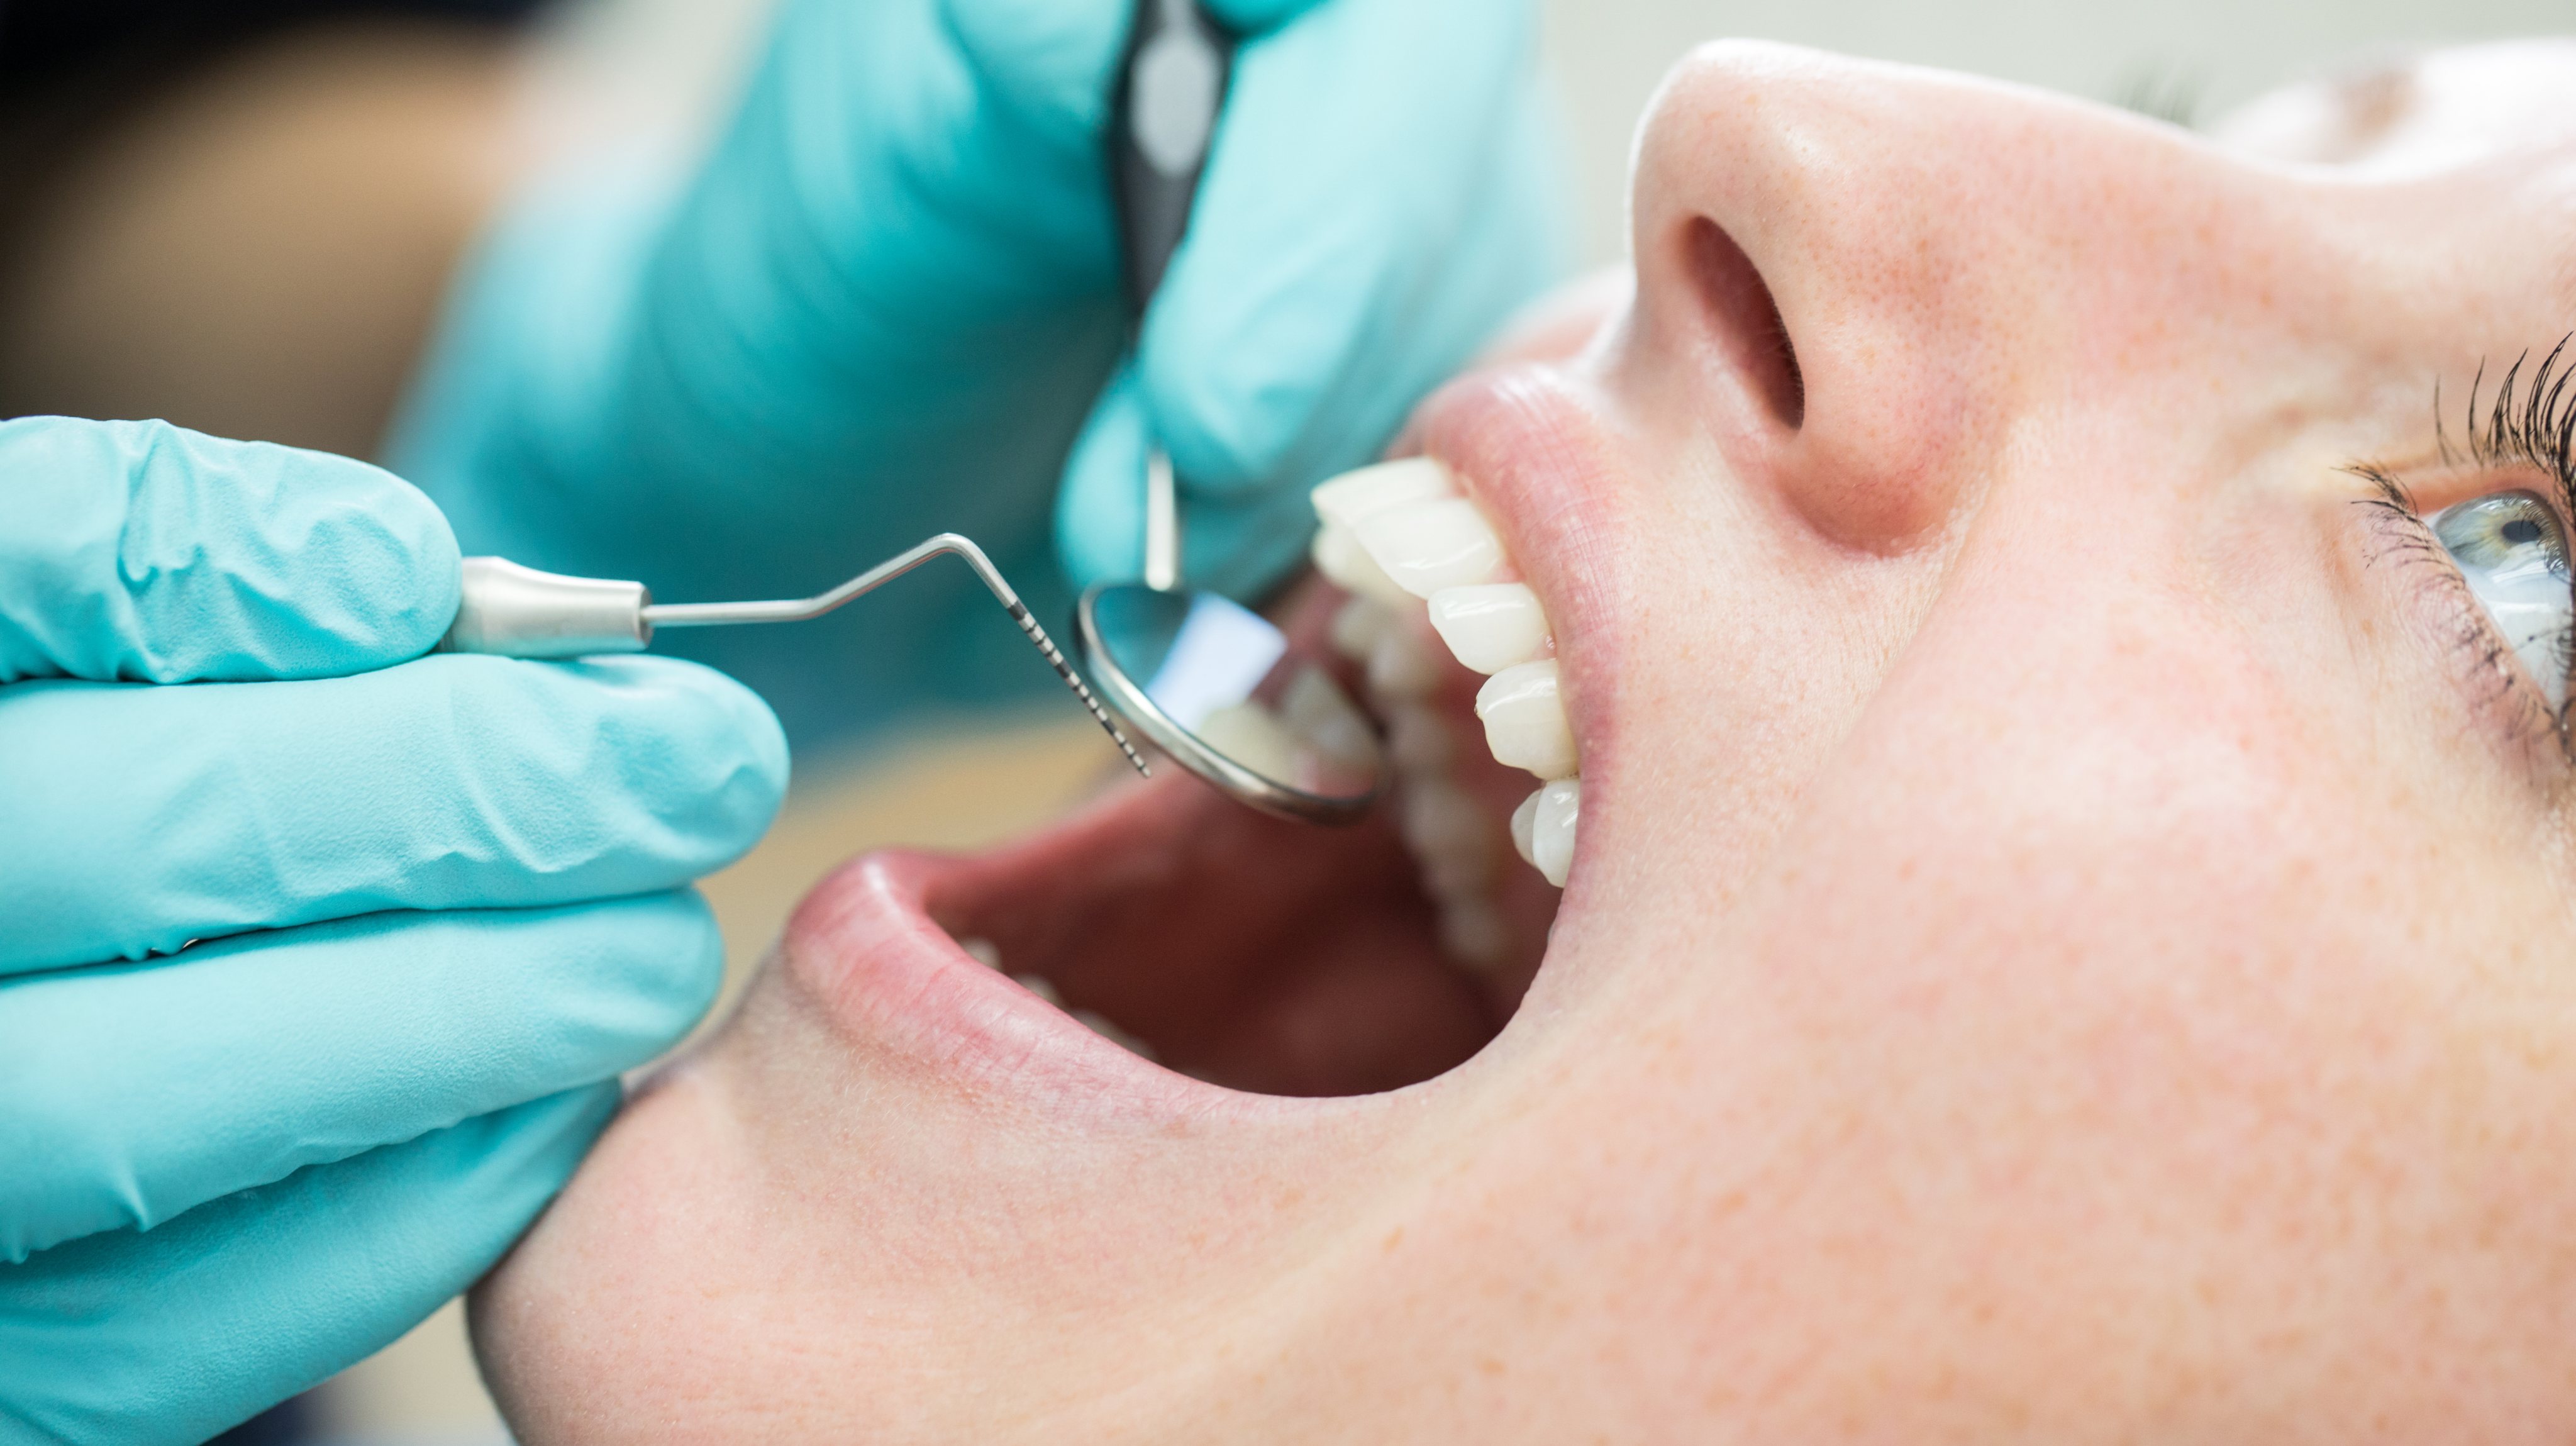 Woman getting a dental check-up at dentistry